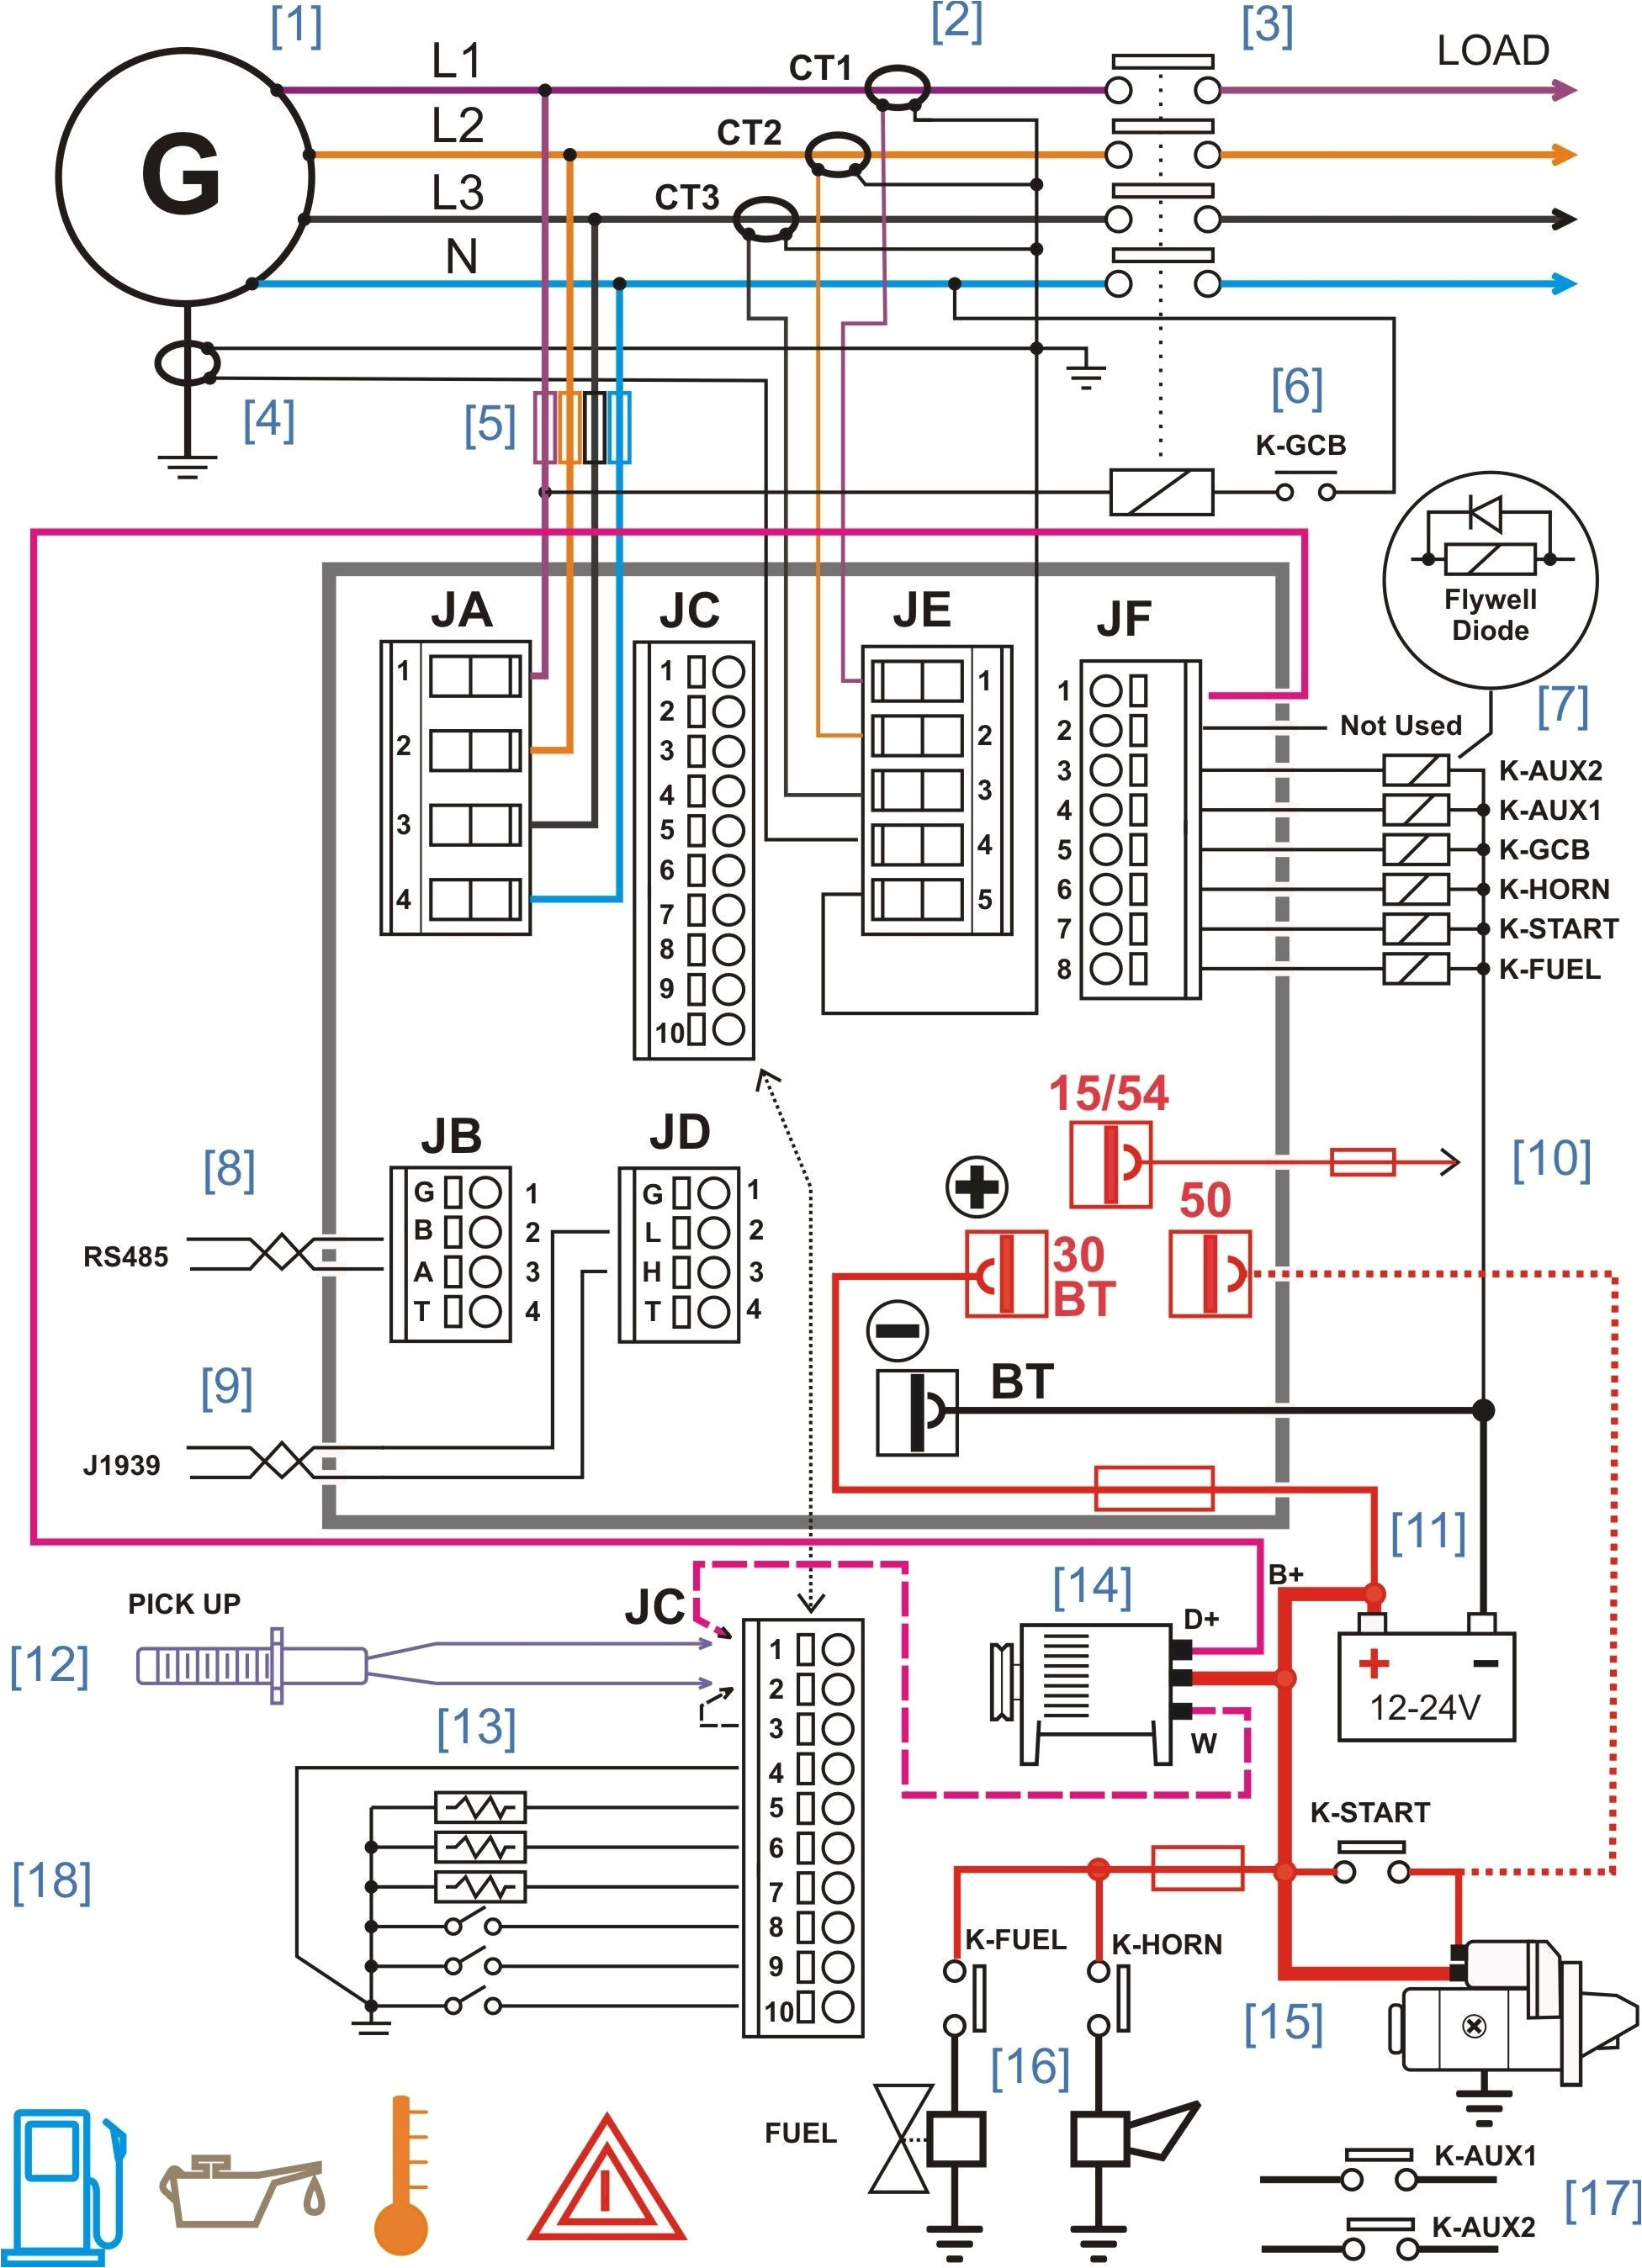 olympian generator wiring diagram wiring diagram datasource connection diagram olympian generator source olympian generator control panel